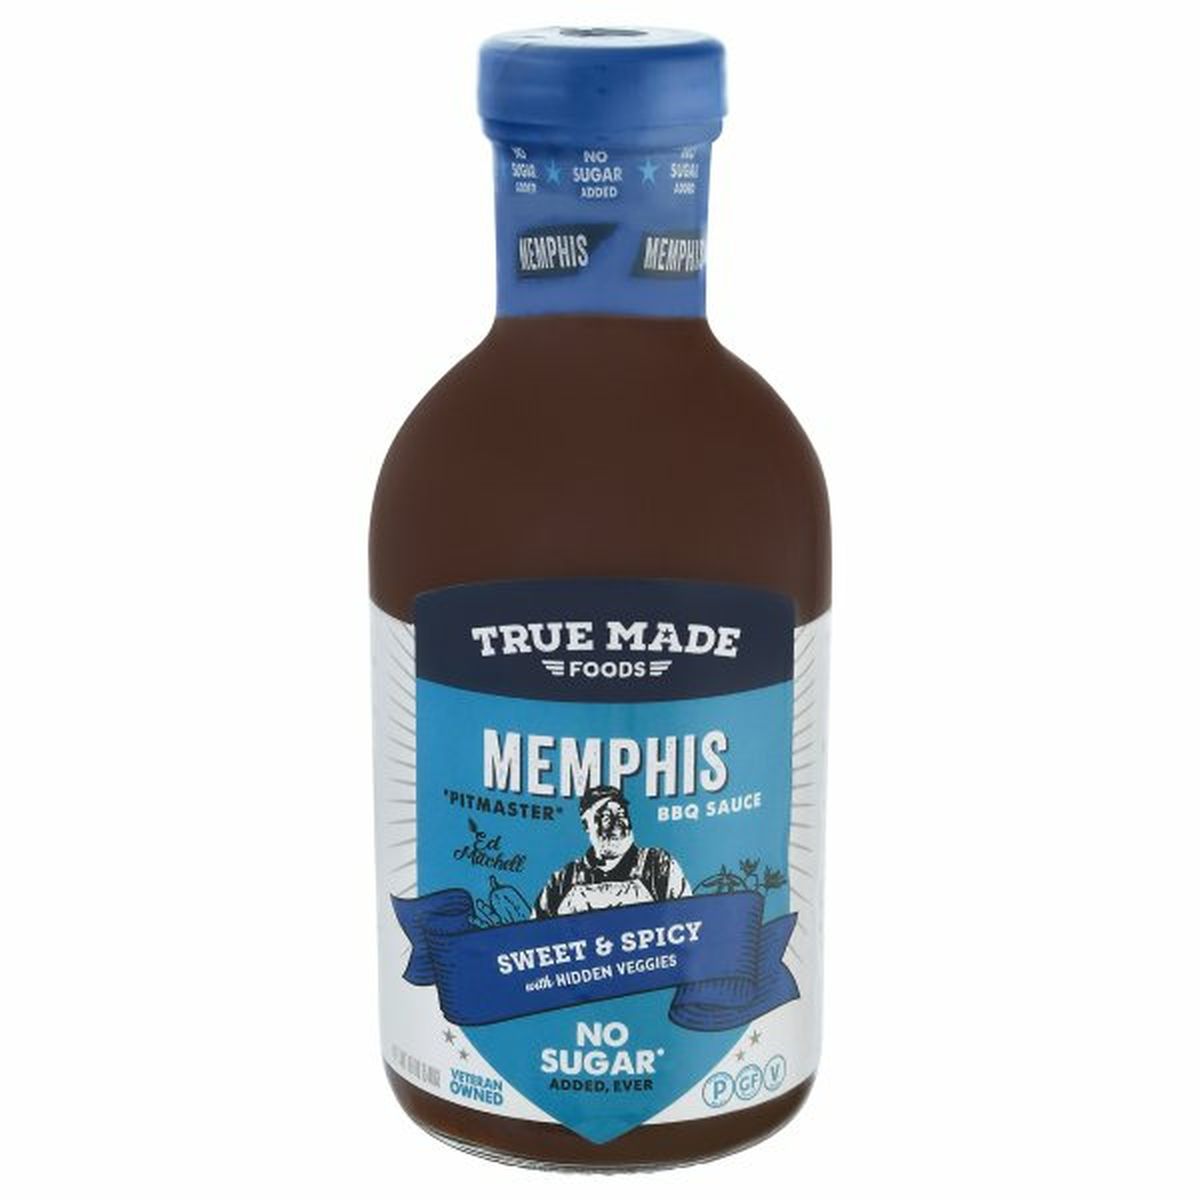 Calories in True Made Foods BBQ Sauce, Memphis